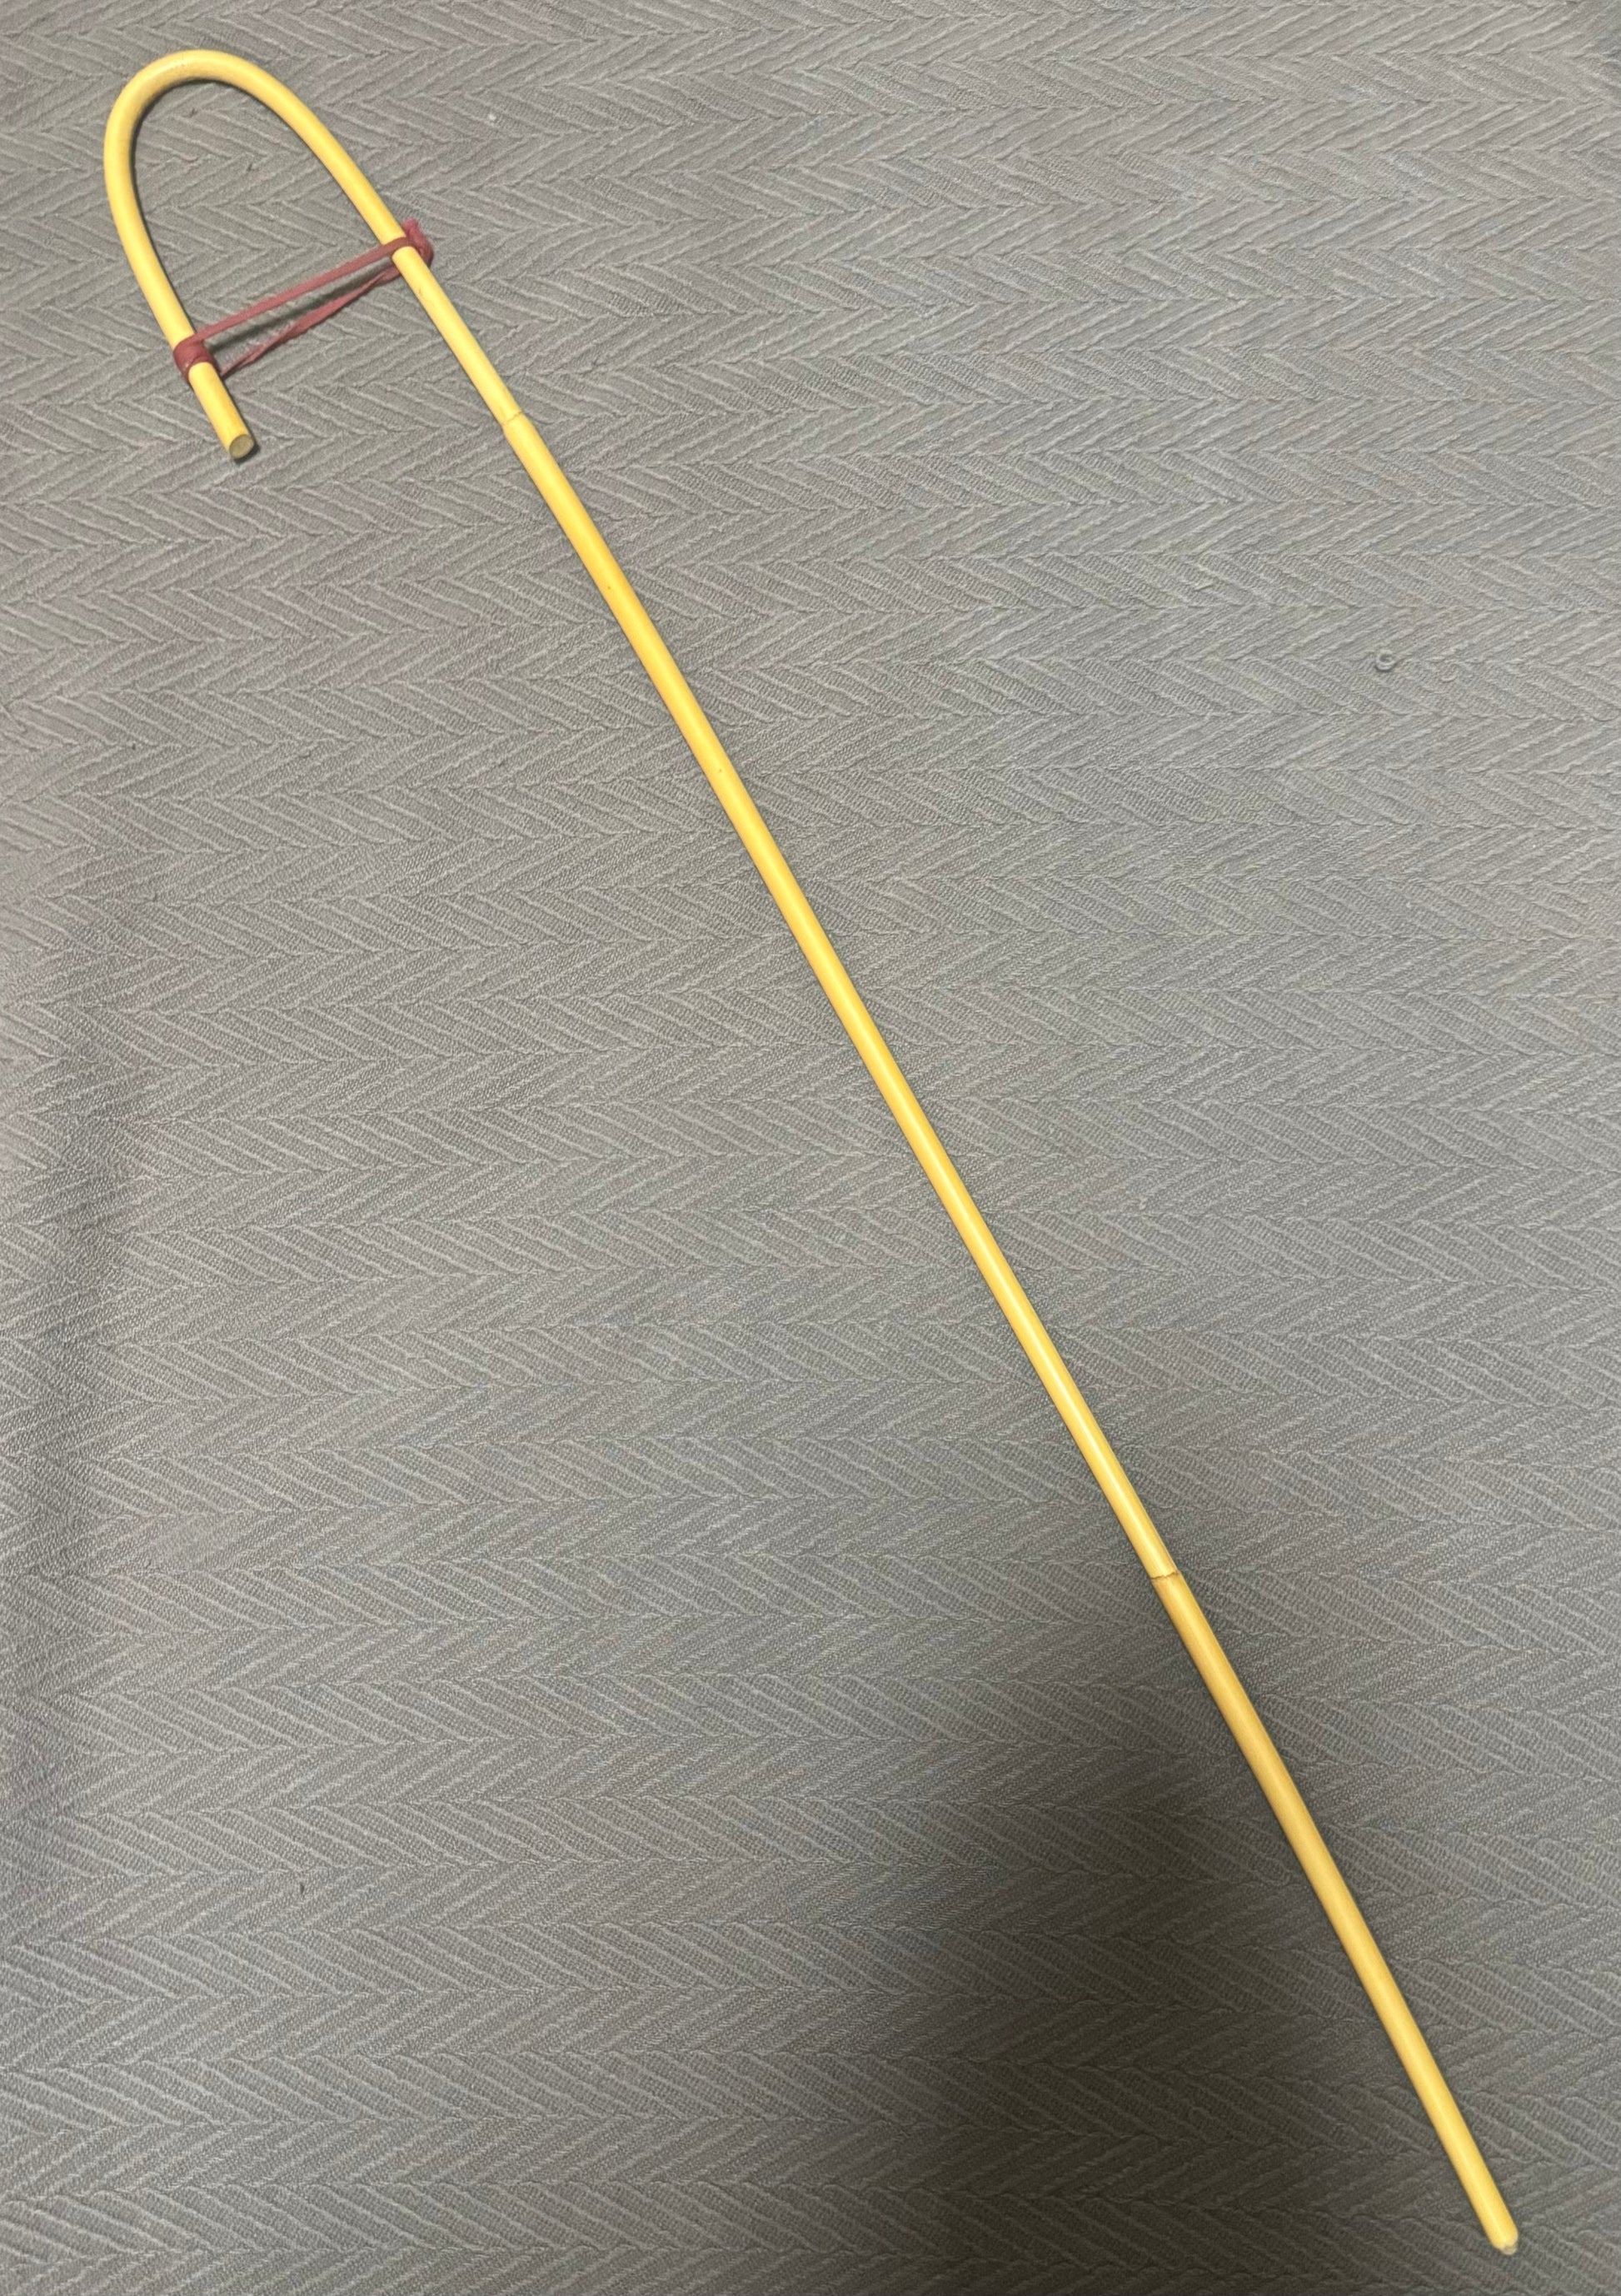 Aristasia Disciplinary Cane  ( Juliana ) - English Crook Handle Dragon Disciplinary cane / Punishment cane - 90 to 93 cms L & 9.5 - 10 mm D - Englishvice Canes